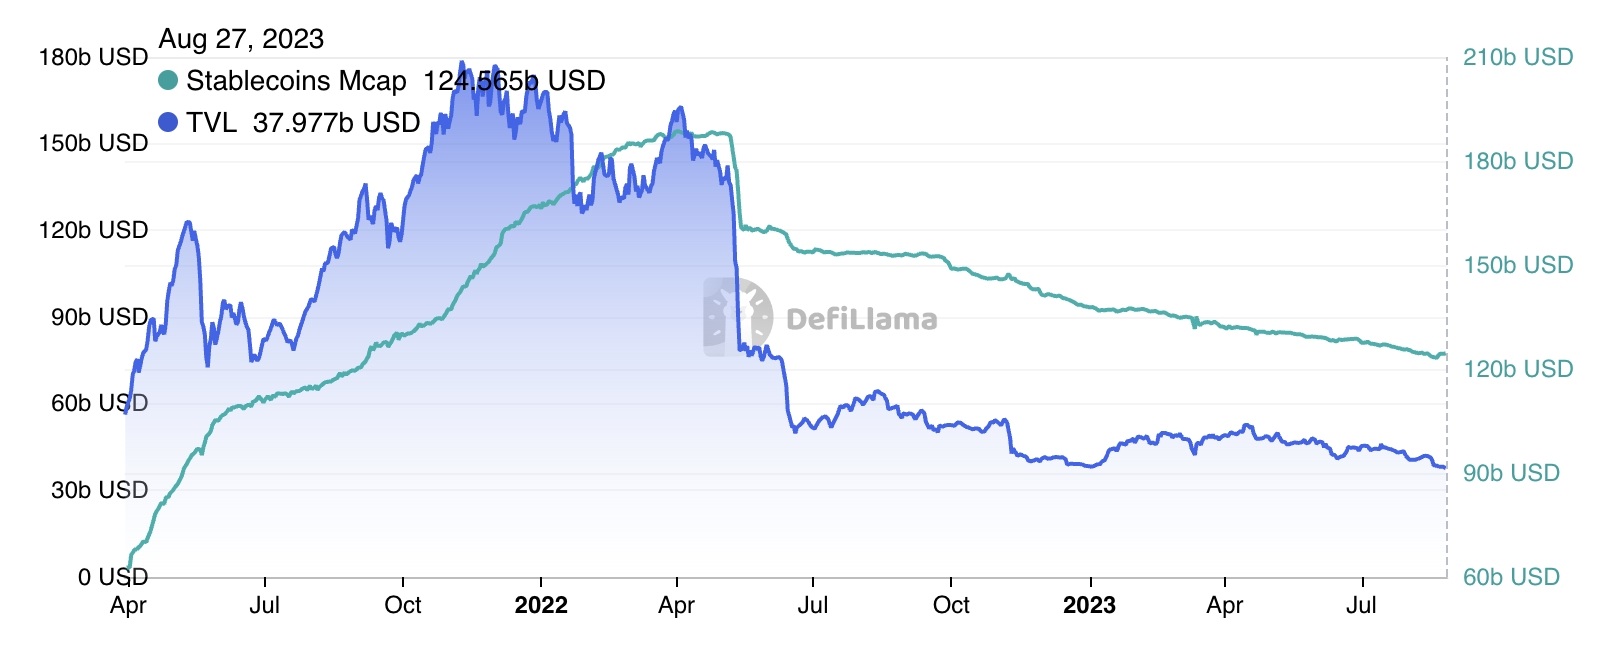 DeFi TVL comparable to Stablecoins market capitalisation. Source: defillama.com